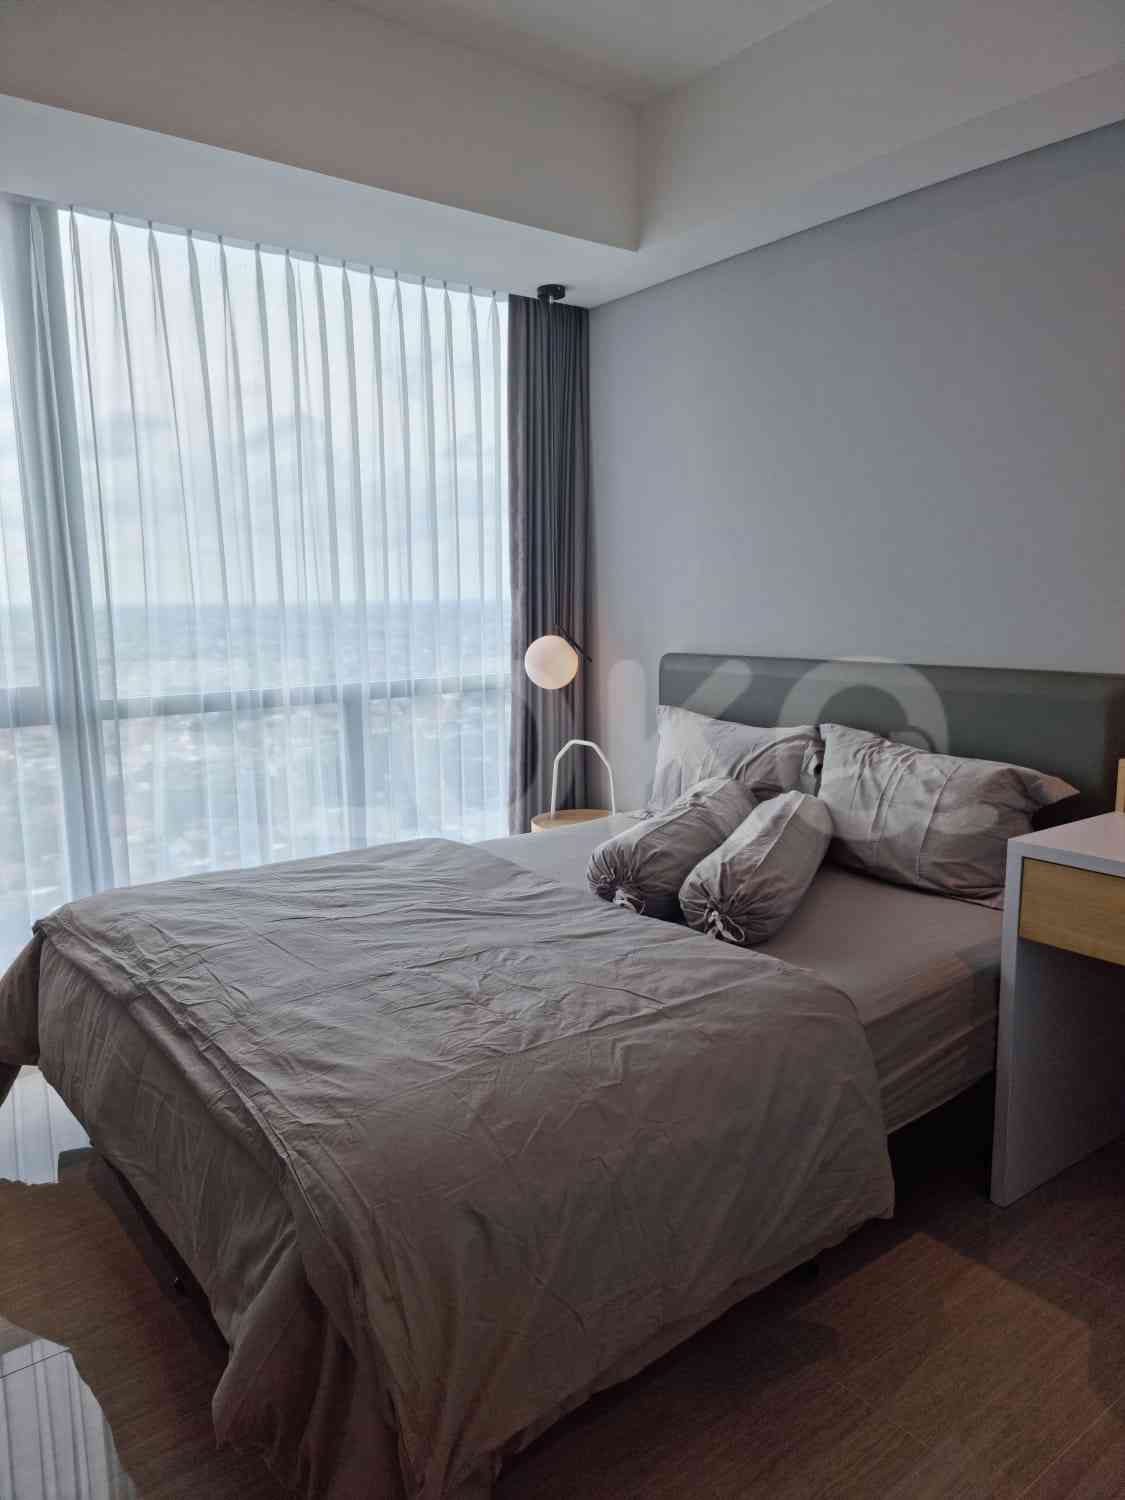 2 Bedroom on 22nd Floor for Rent in Millenium Village Apartment - fkad74 1